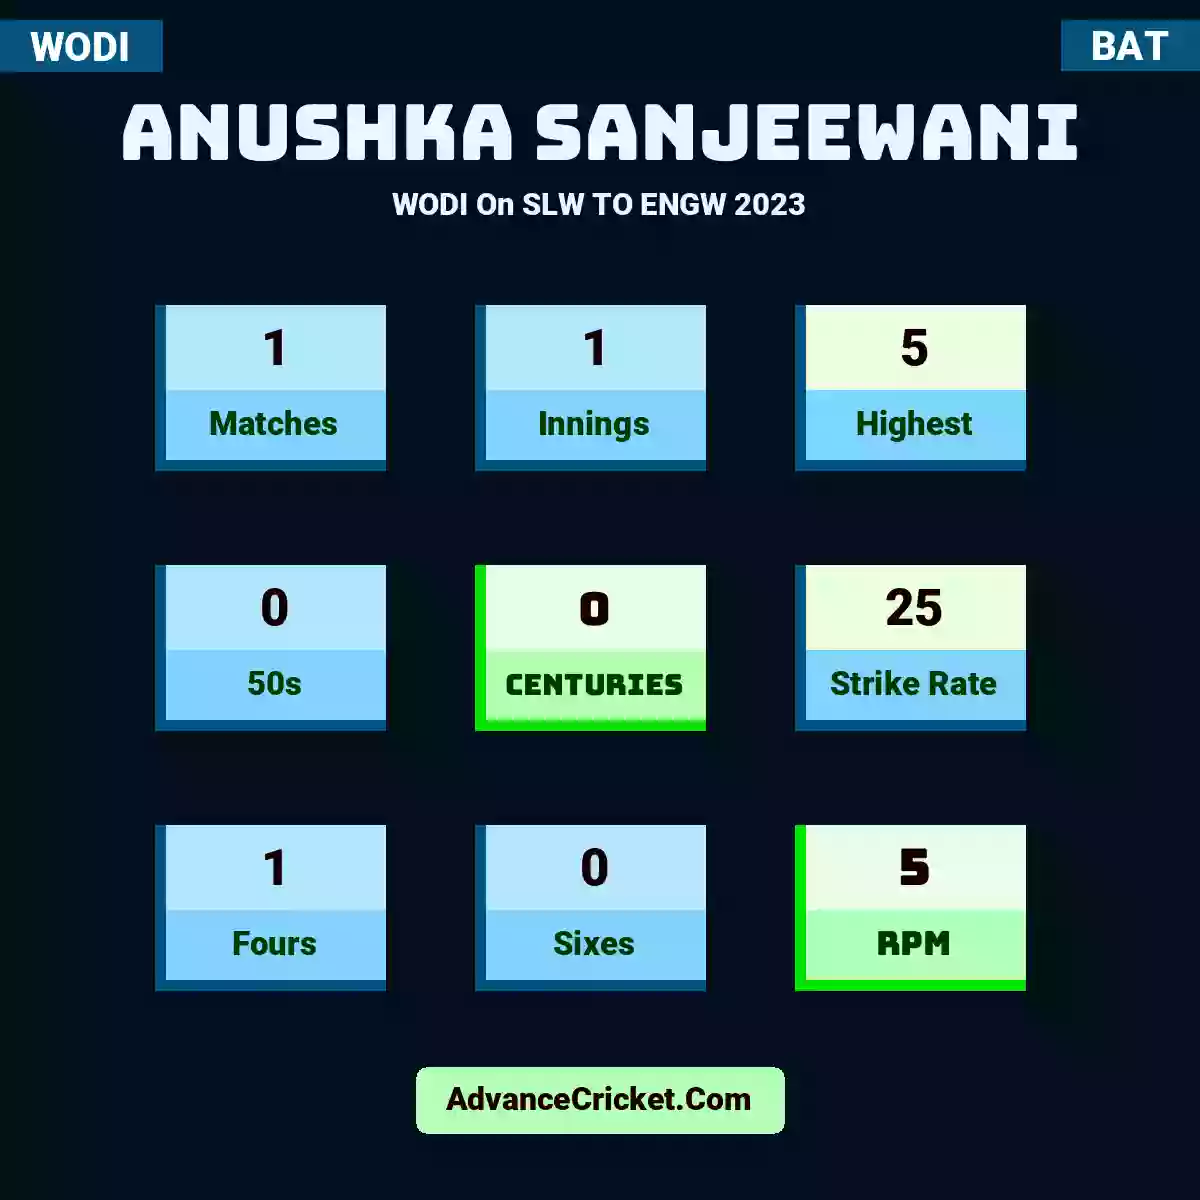 Anushka Sanjeewani WODI  On SLW TO ENGW 2023, Anushka Sanjeewani played 1 matches, scored 5 runs as highest, 0 half-centuries, and 0 centuries, with a strike rate of 25. A.Sanjeewani hit 1 fours and 0 sixes, with an RPM of 5.